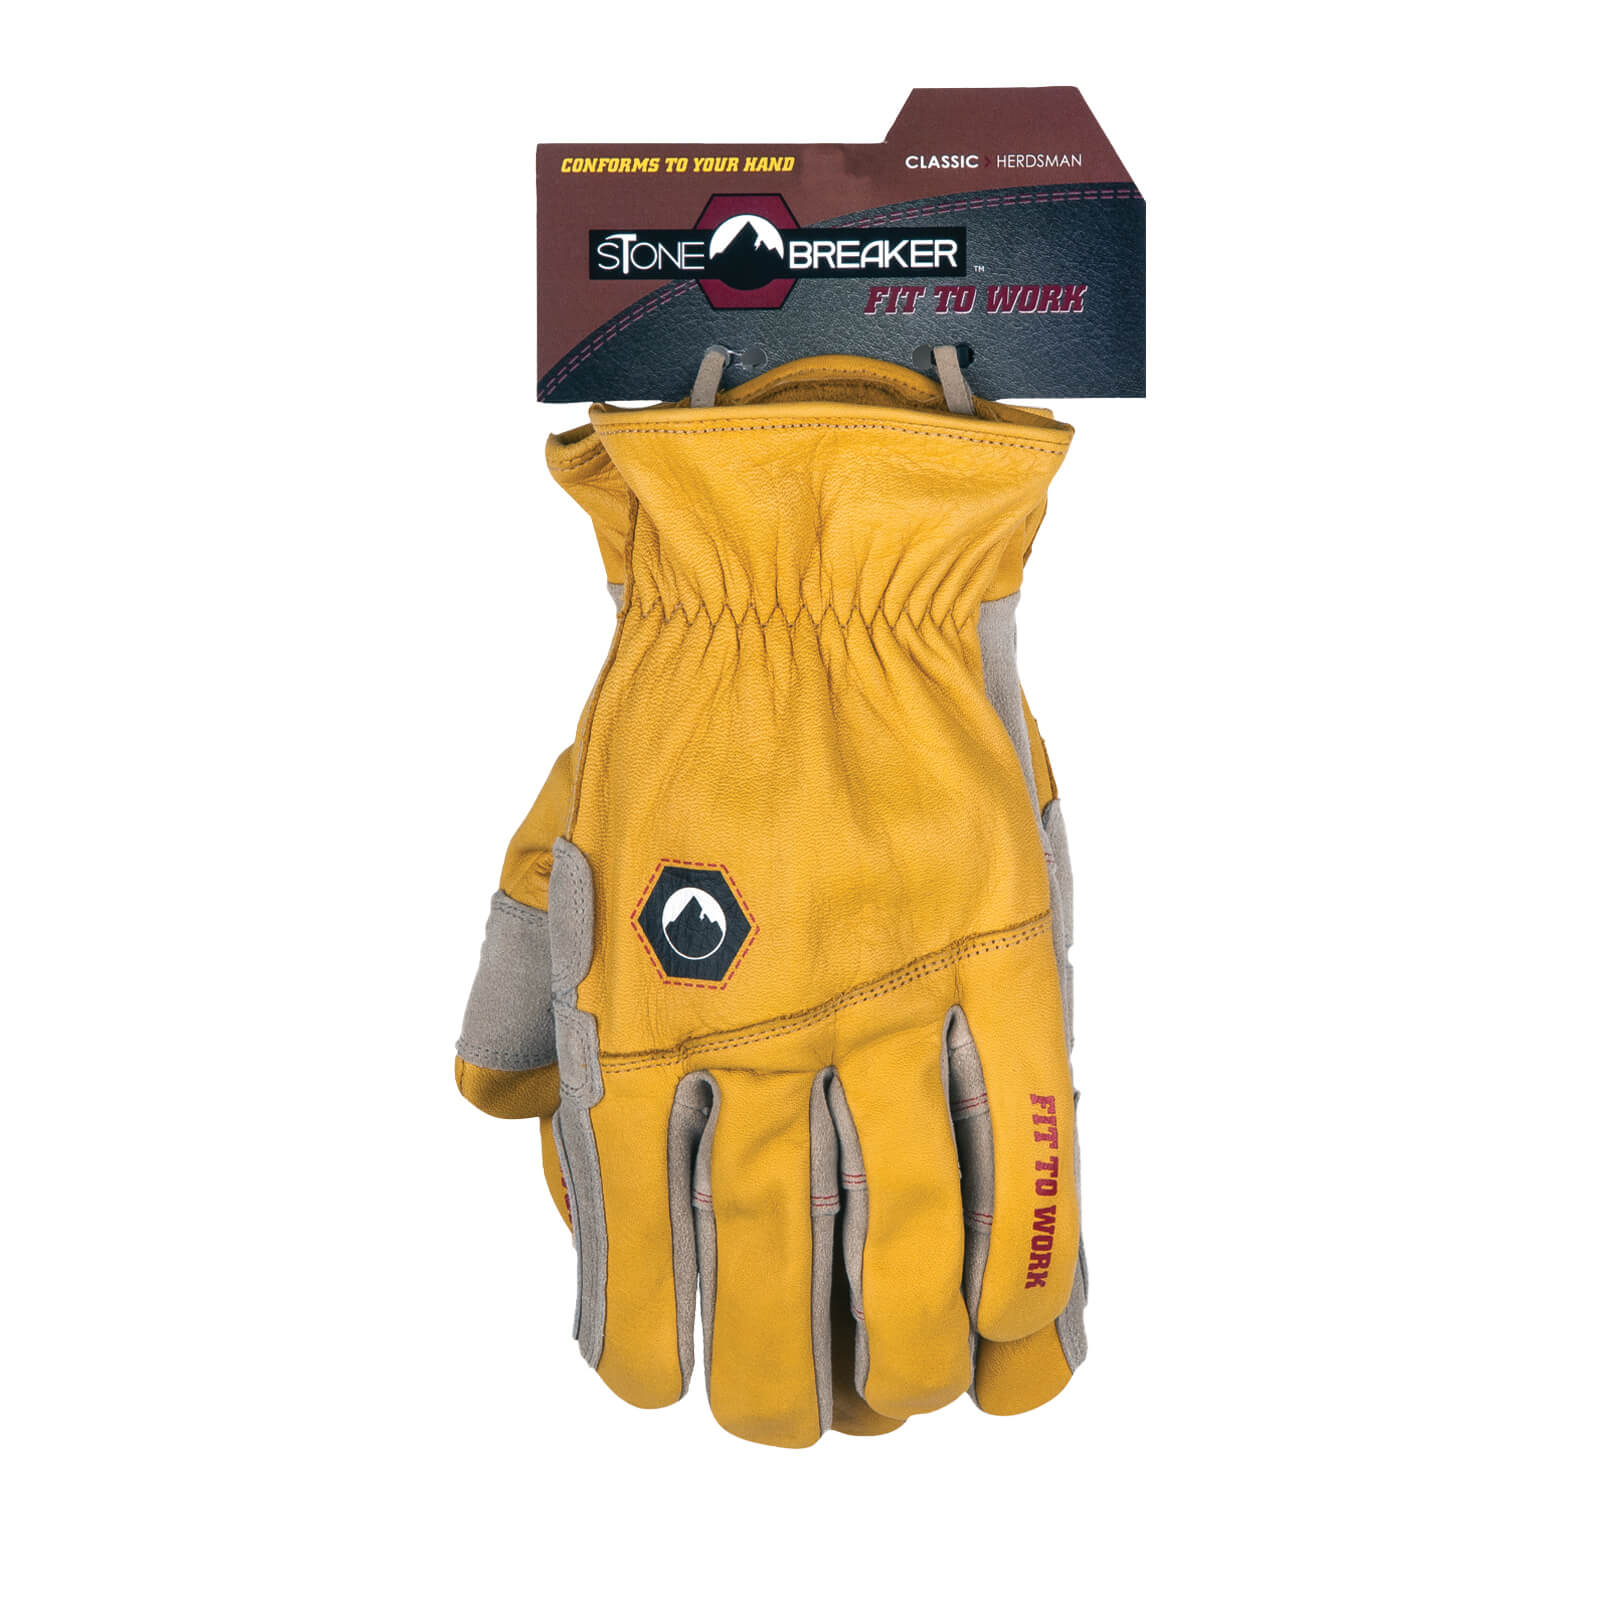 StoneBreaker Rancher Leather Work Gloves- Large